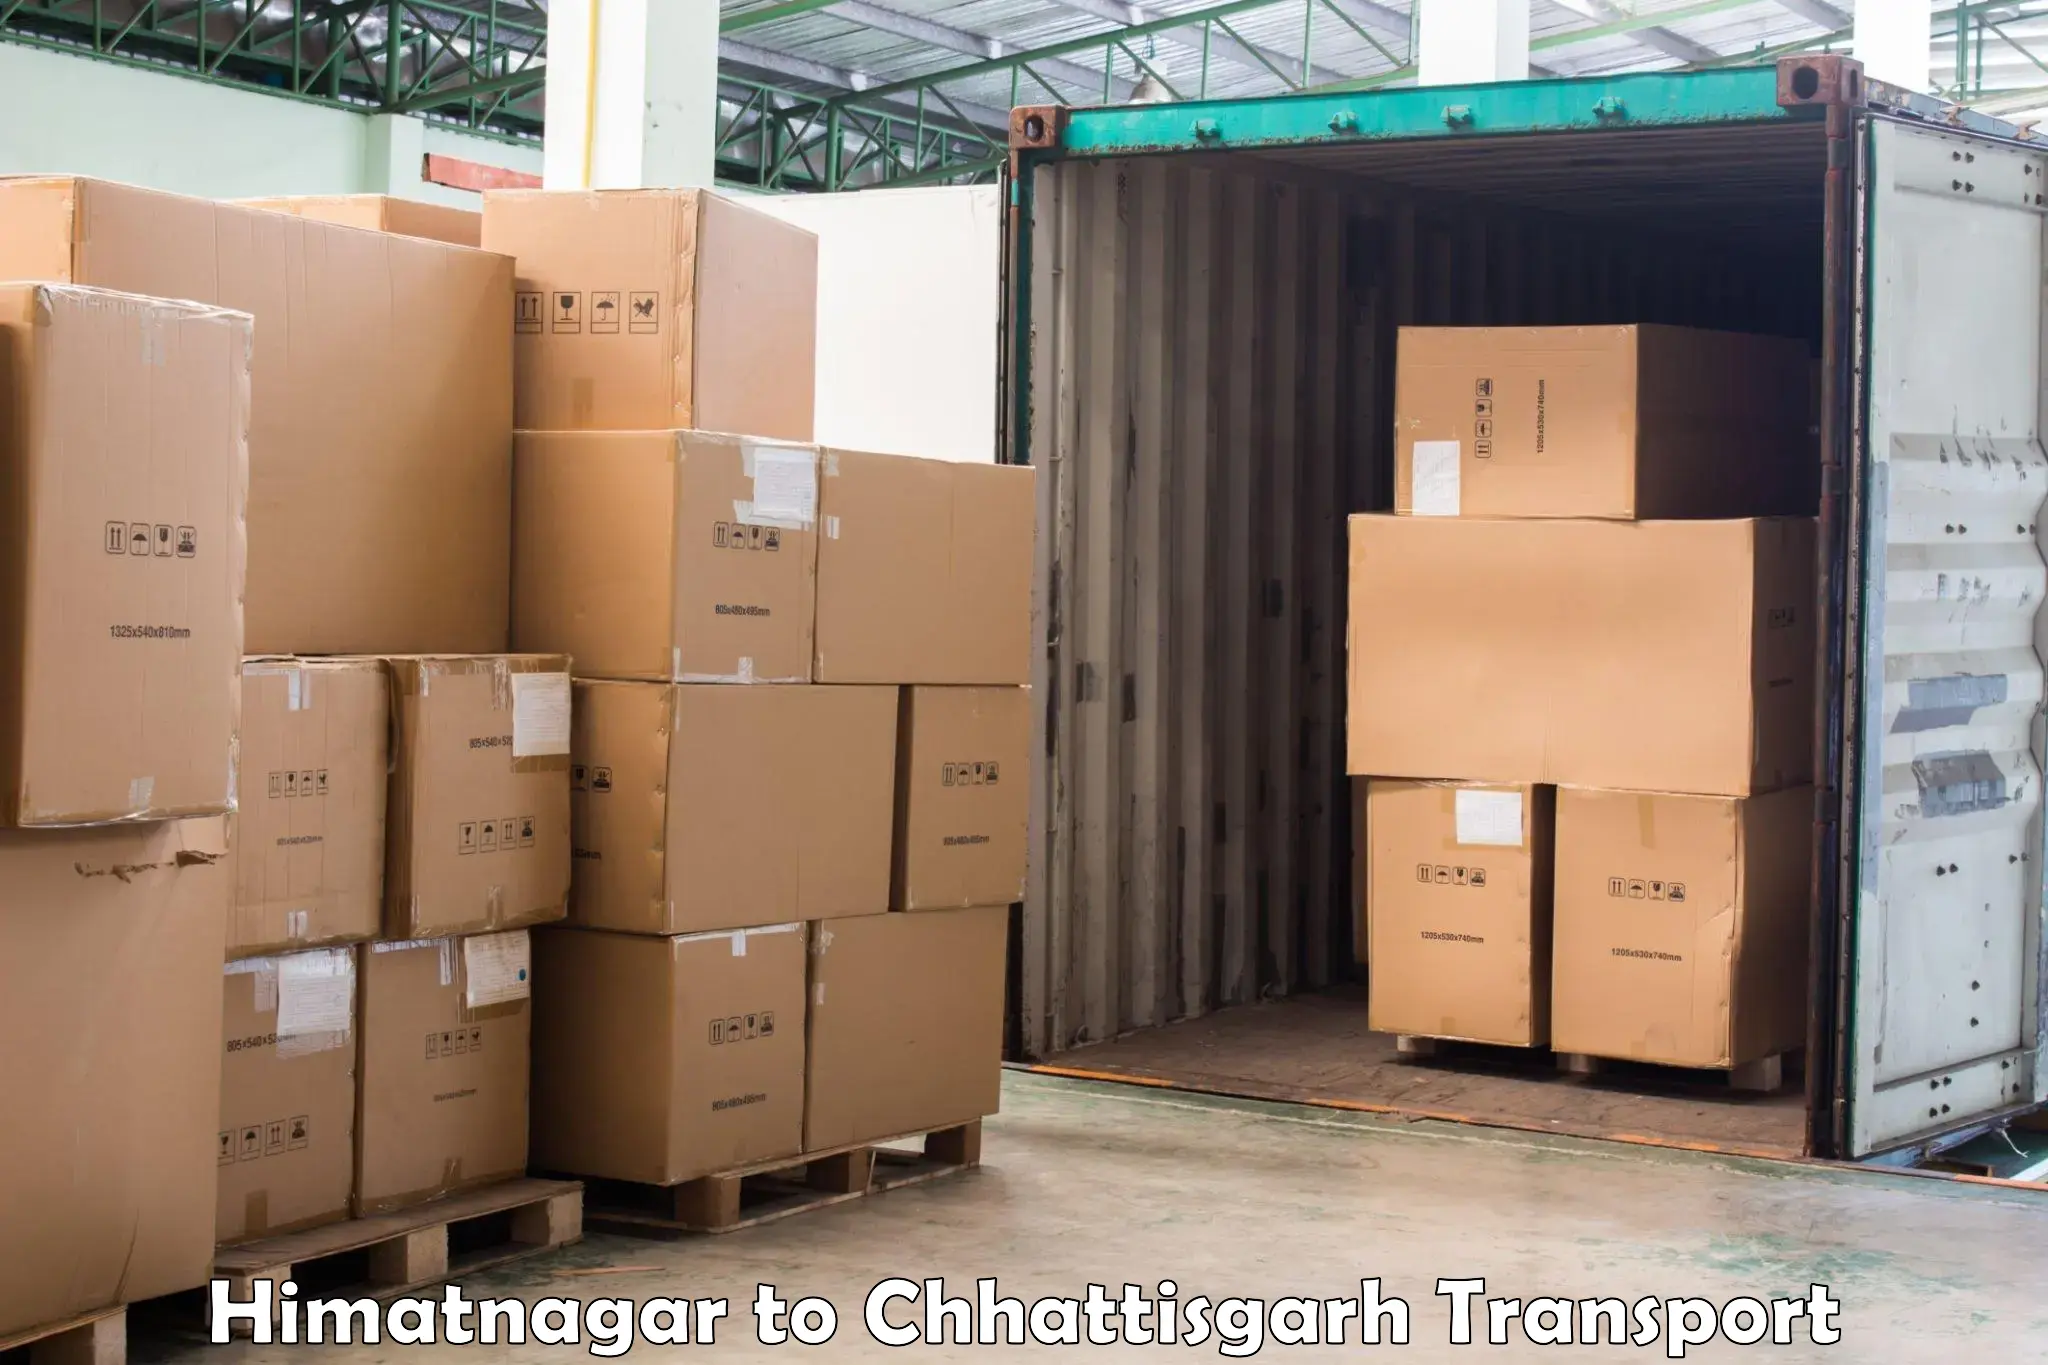 Delivery service Himatnagar to Raipur